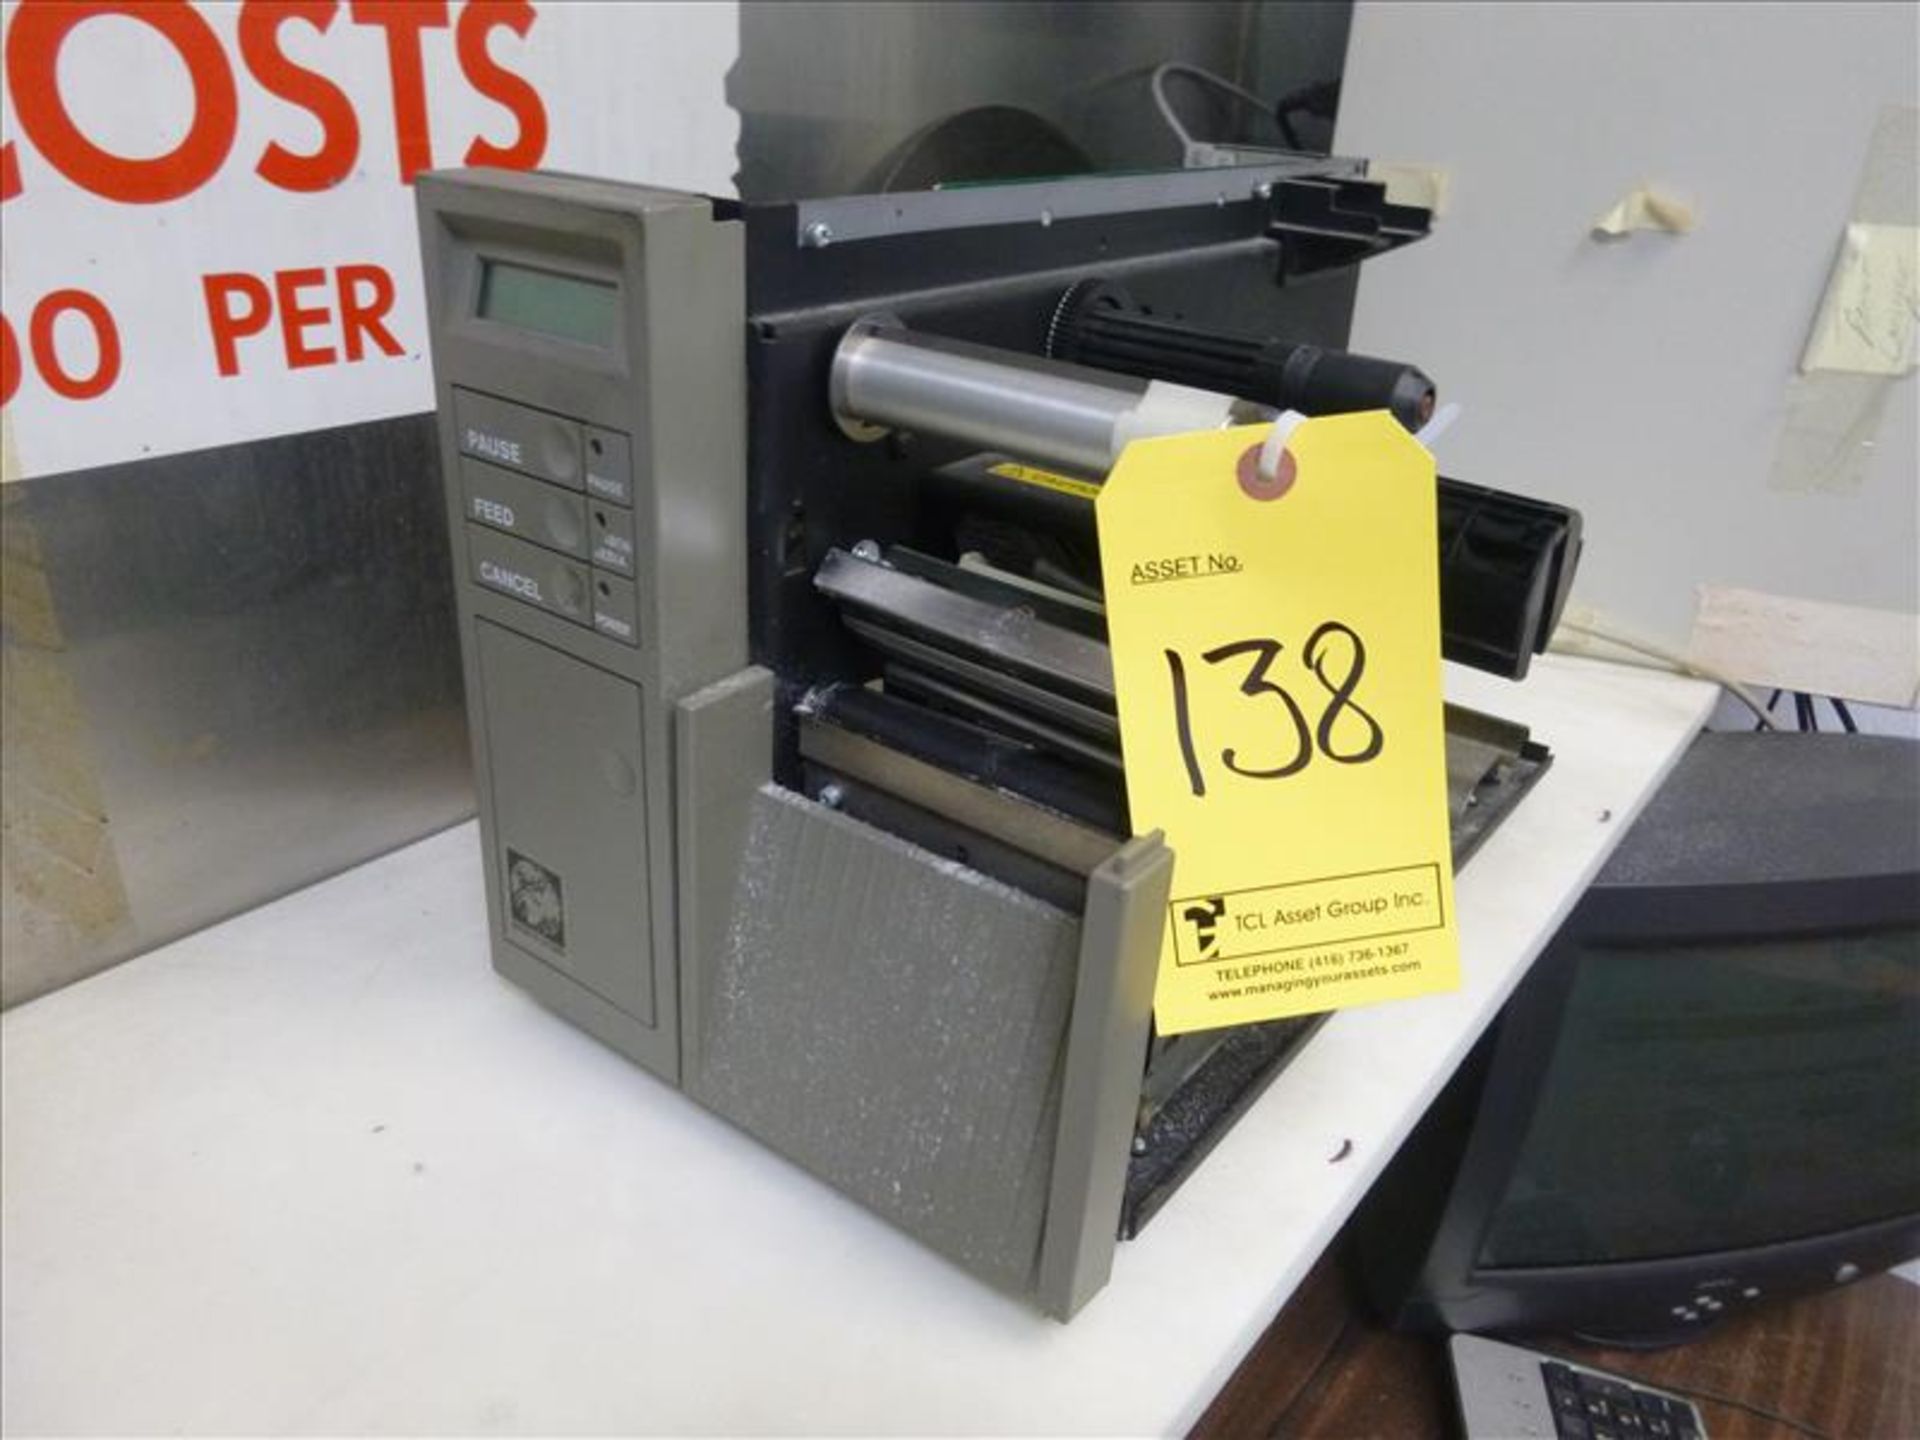 DataMax Label Printer mod. ProdigyMax ser. no. 97075061 (Located at 140 Panet Road, Winnipeg, MA)